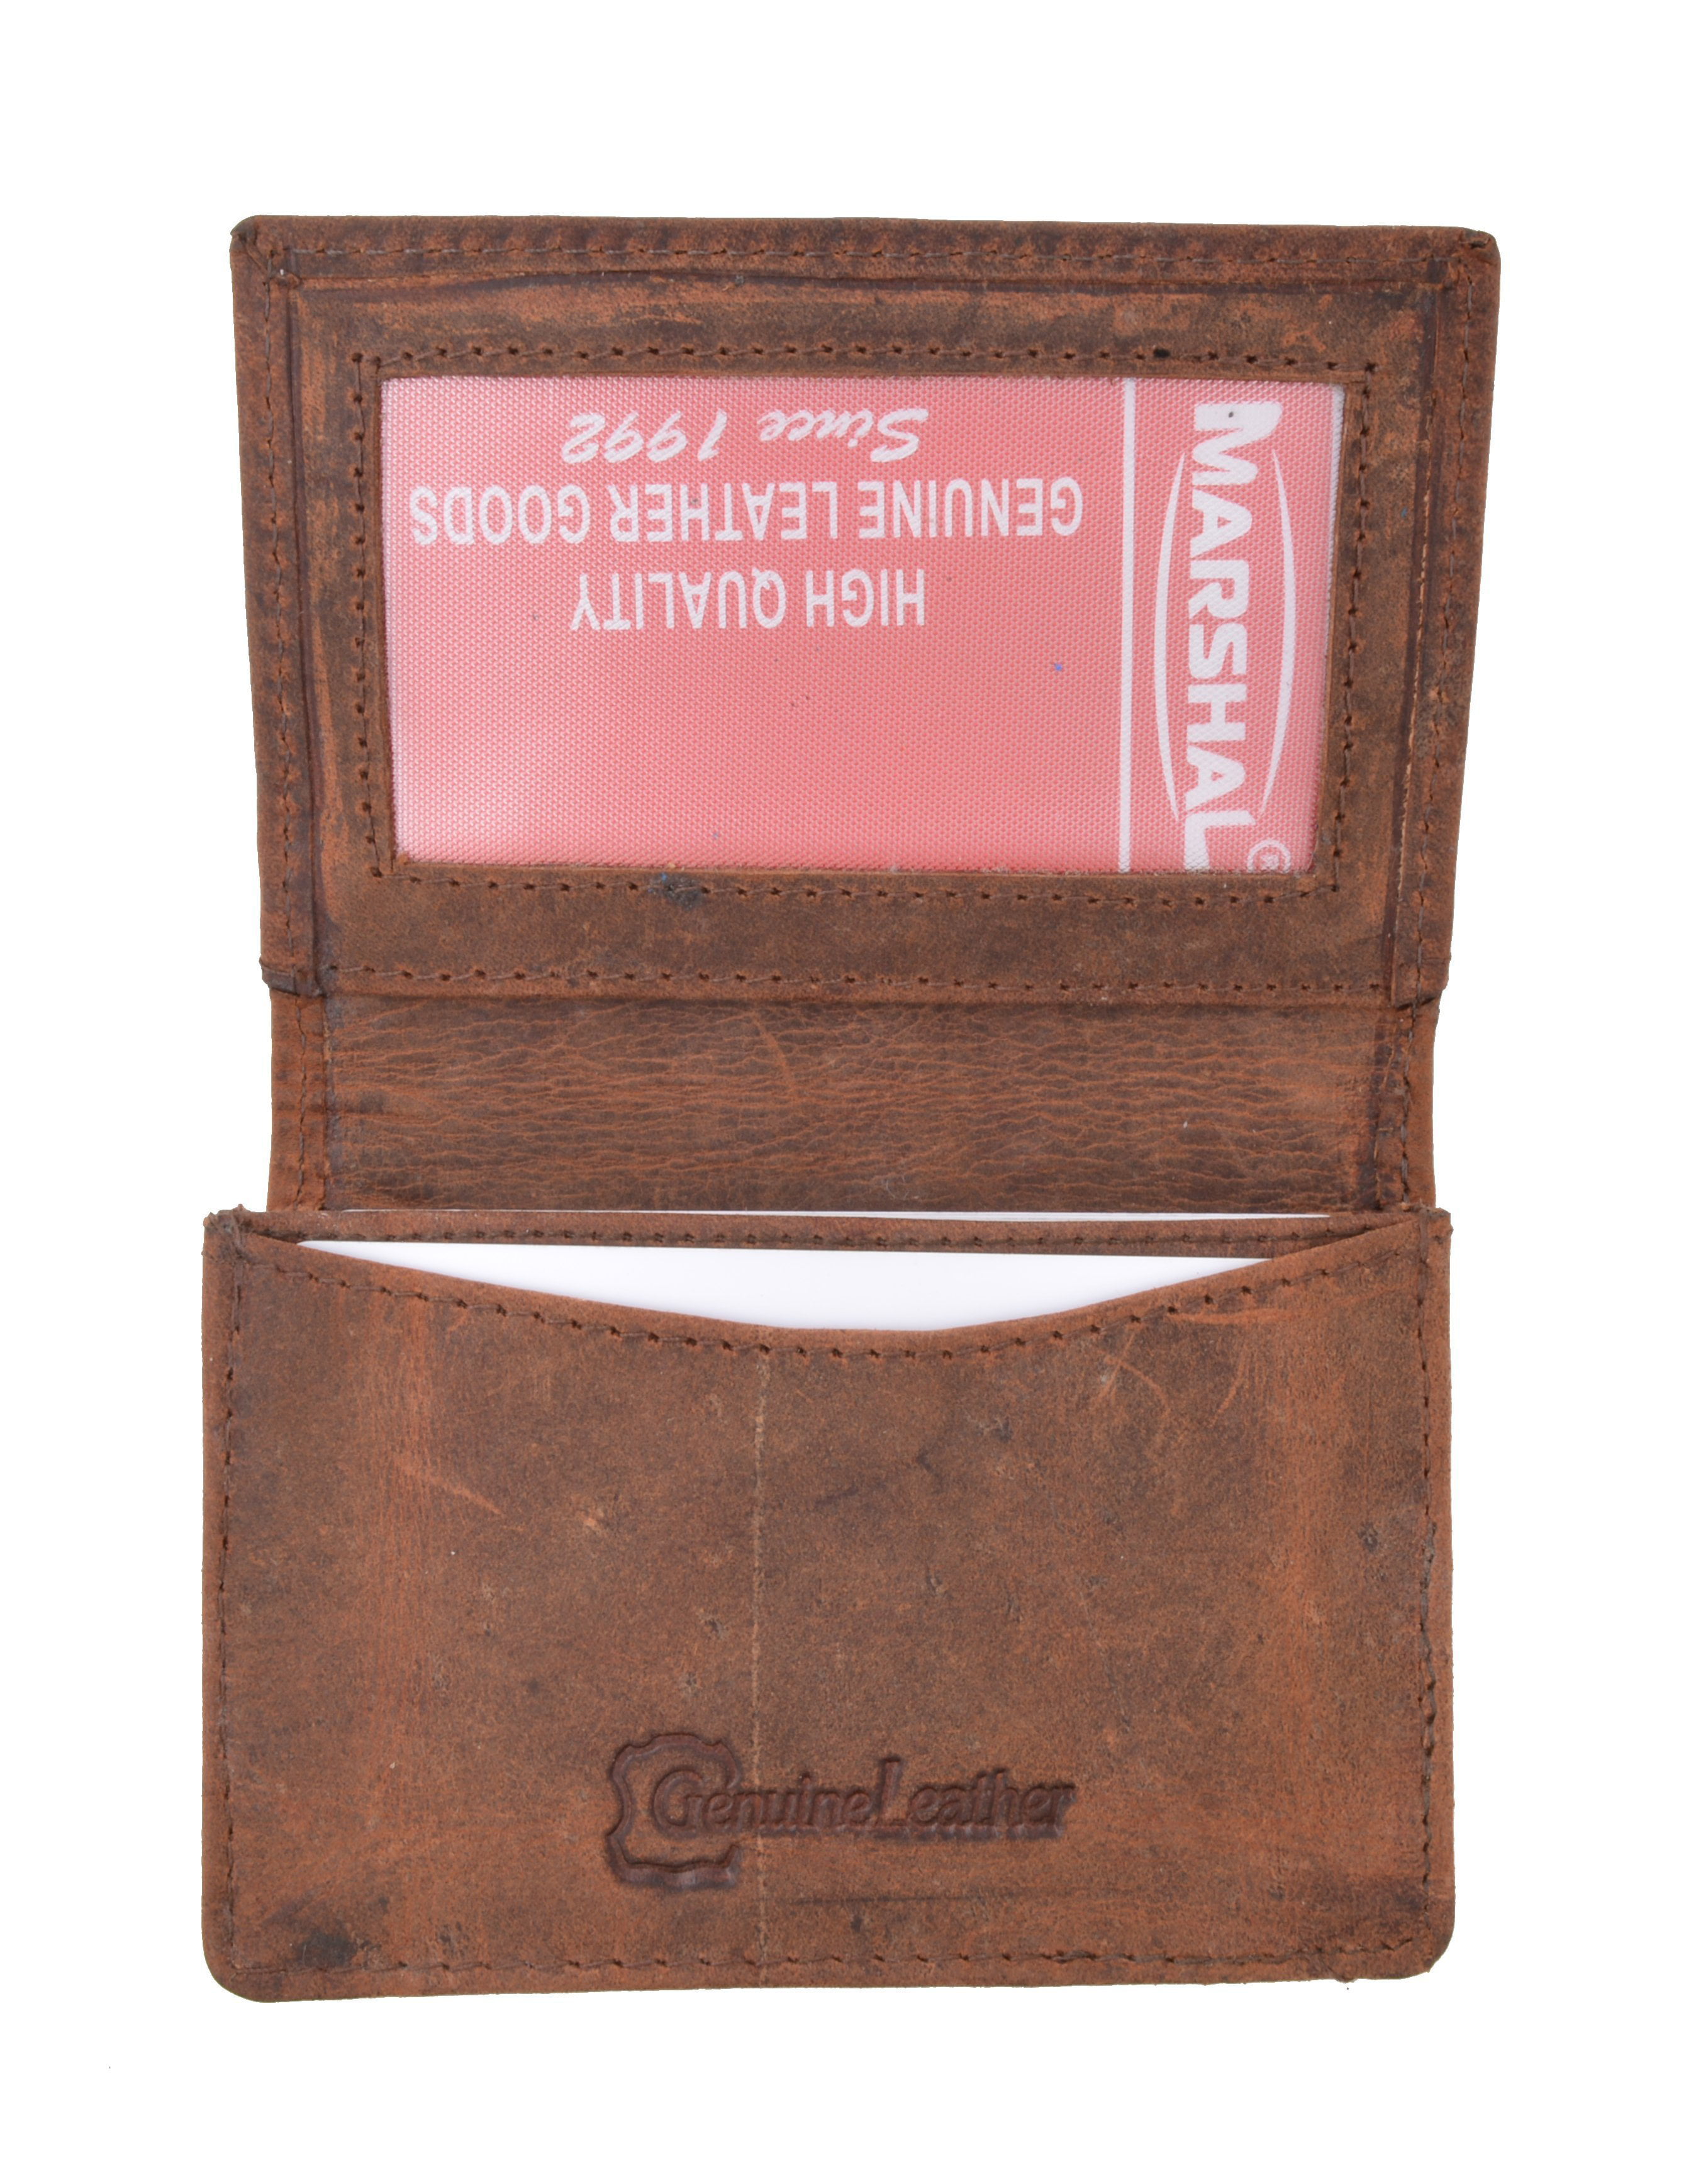 100/% Genuine Leather Slim Bifold Wallet RFID Blocking Business Card Holder